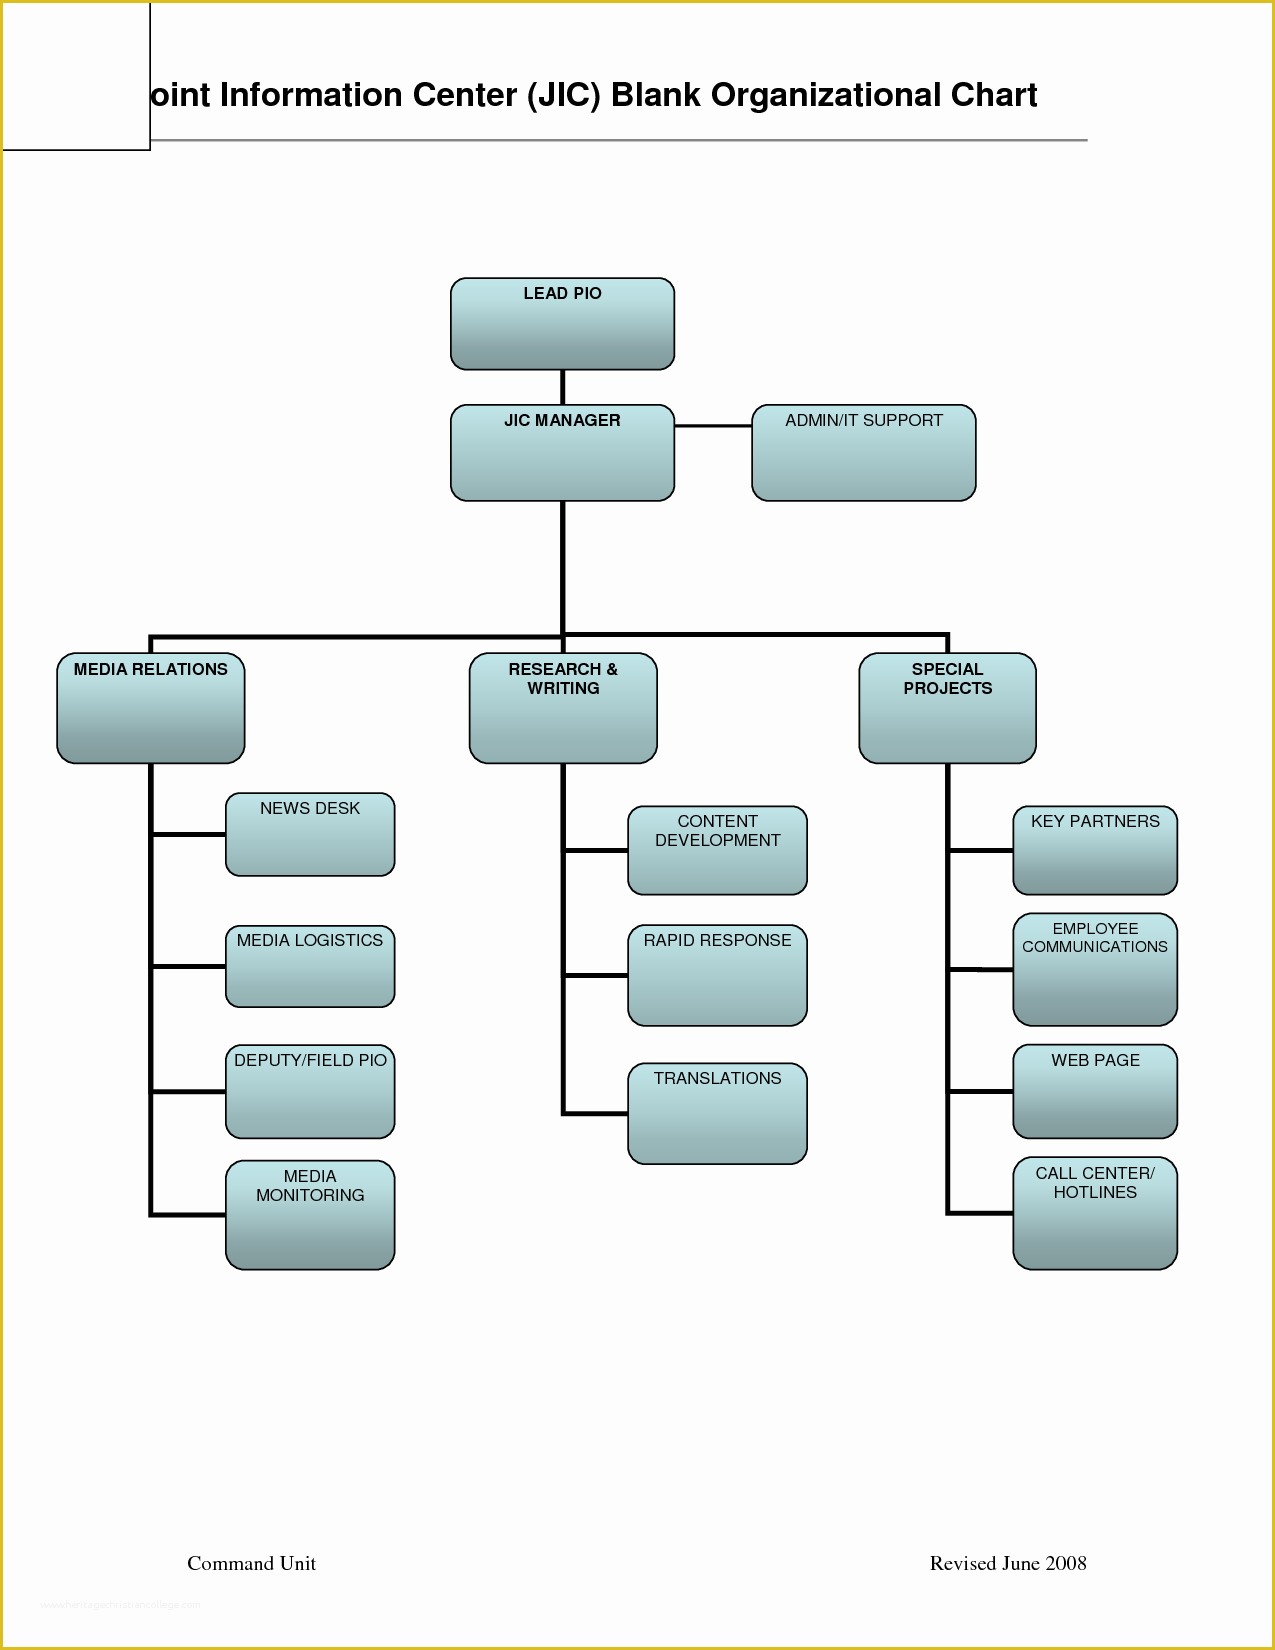 Organizational Flow Chart Template Free Of Chart Blank organizational to Pin On Pinterest